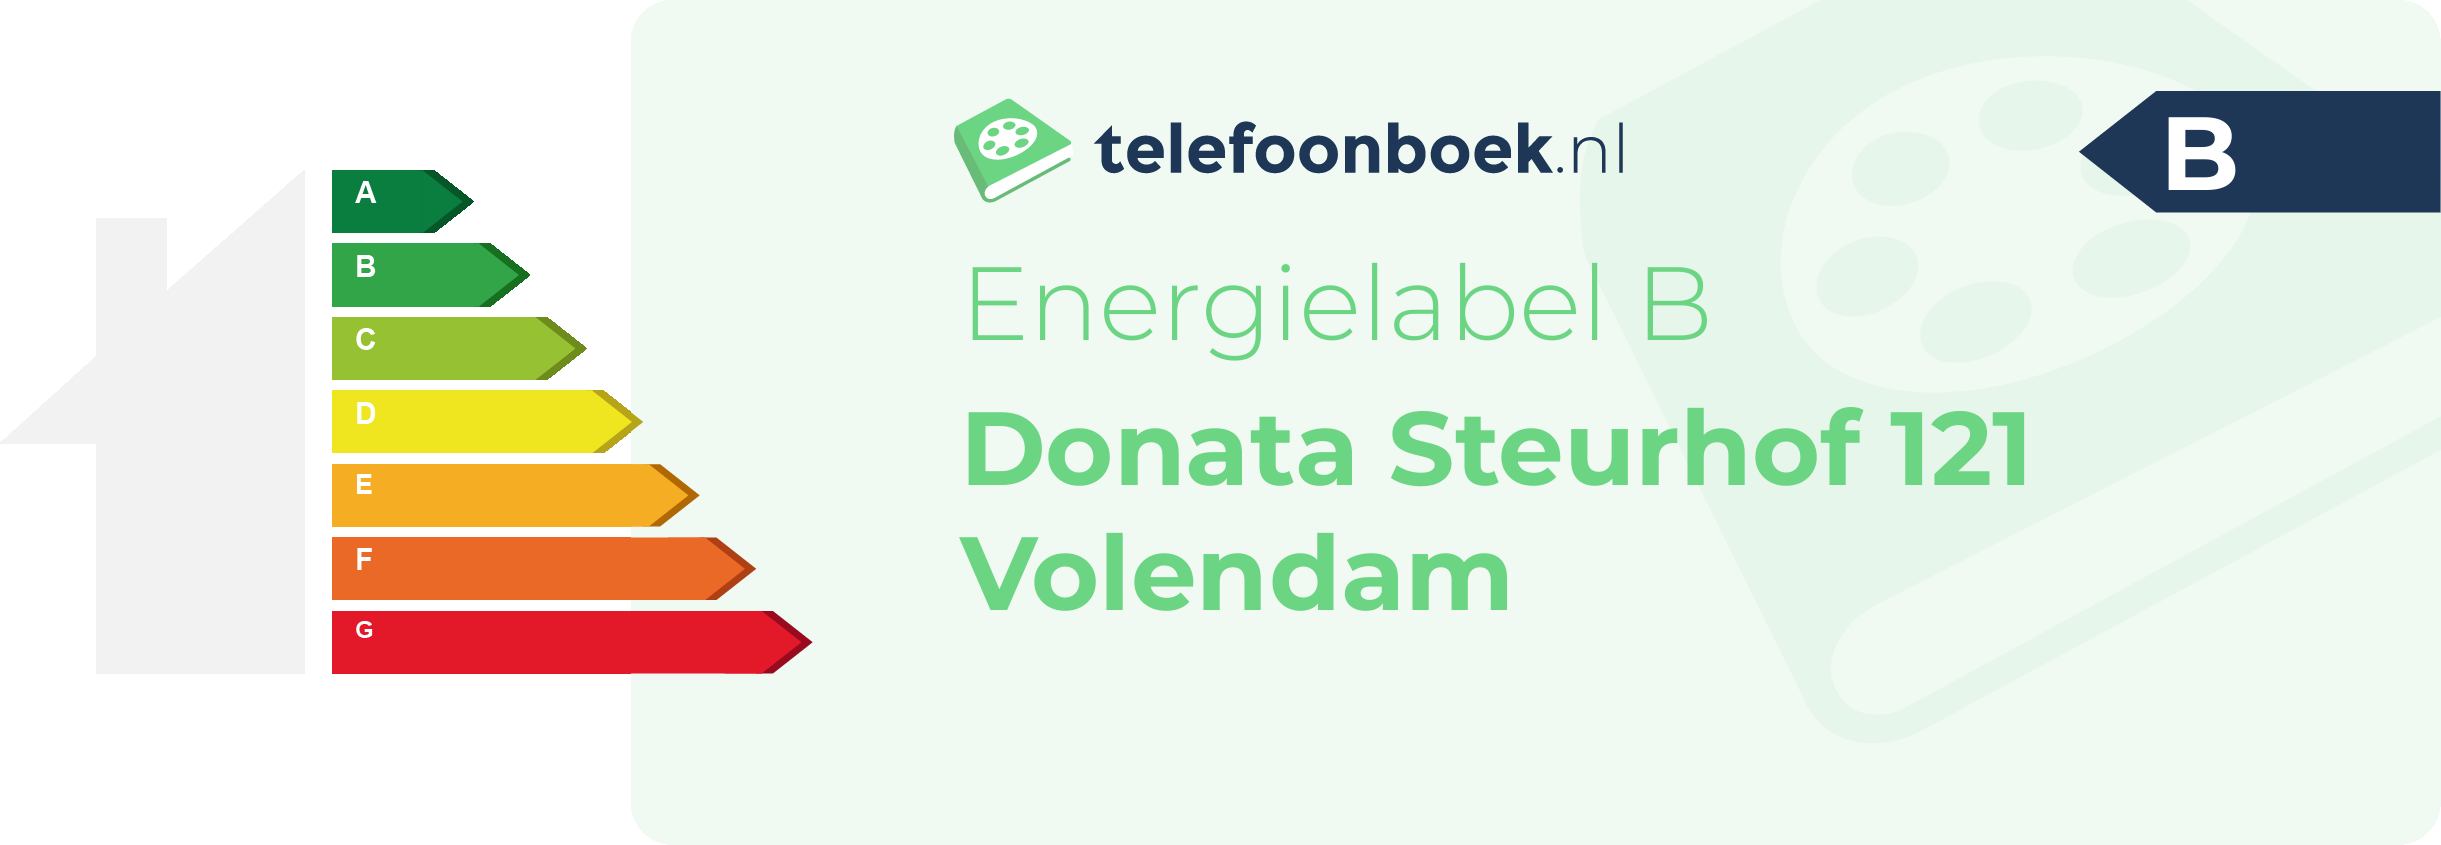 Energielabel Donata Steurhof 121 Volendam